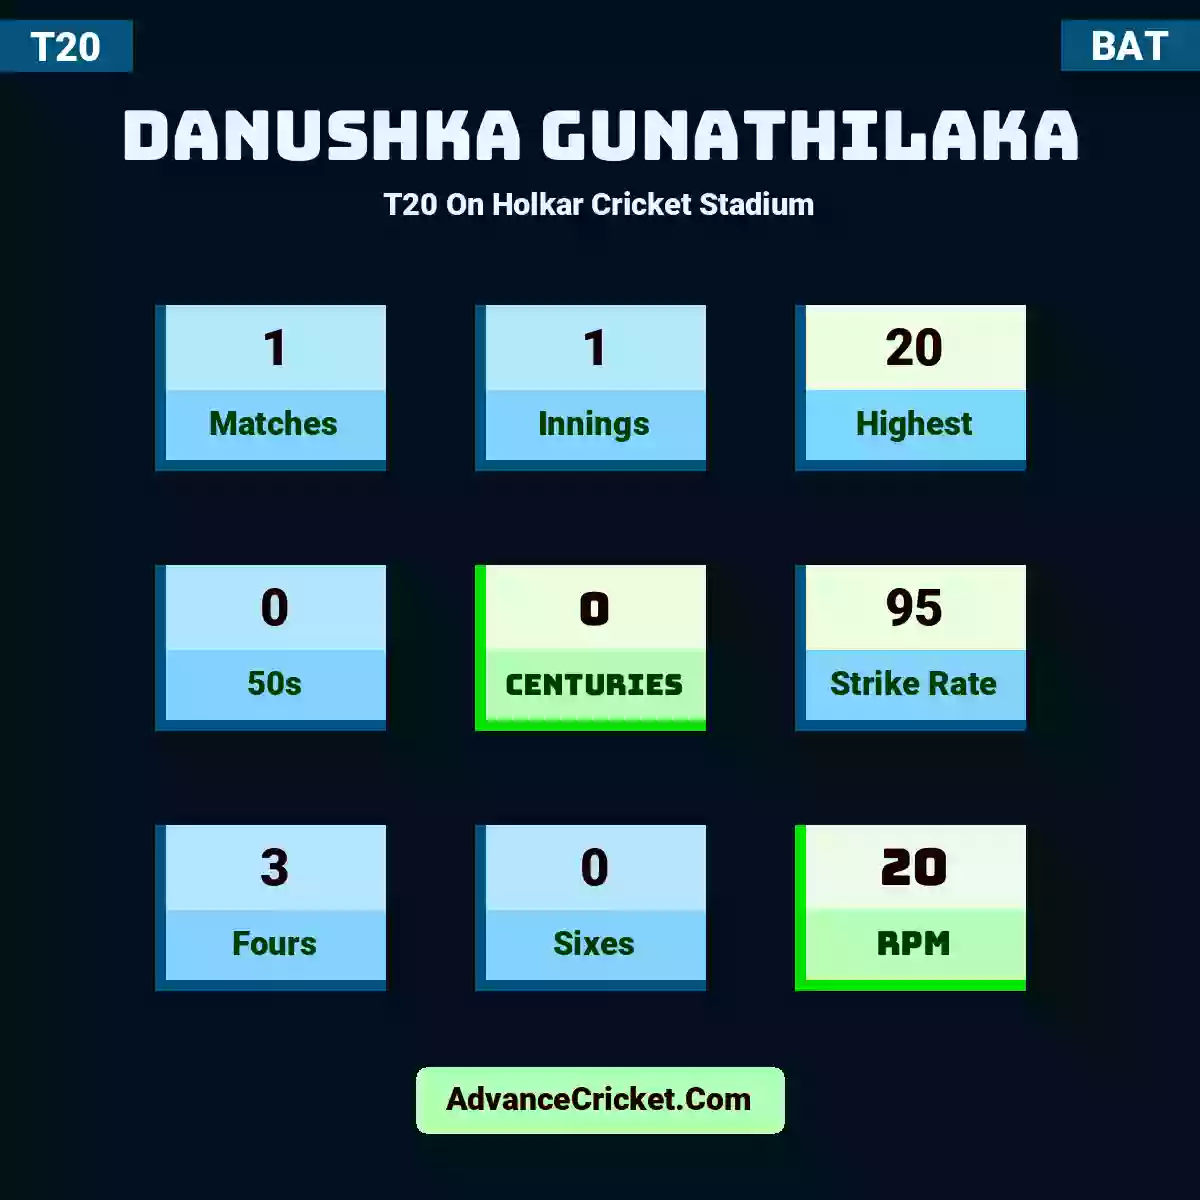 Danushka Gunathilaka T20  On Holkar Cricket Stadium, Danushka Gunathilaka played 1 matches, scored 20 runs as highest, 0 half-centuries, and 0 centuries, with a strike rate of 95. D.Gunathilaka hit 3 fours and 0 sixes, with an RPM of 20.